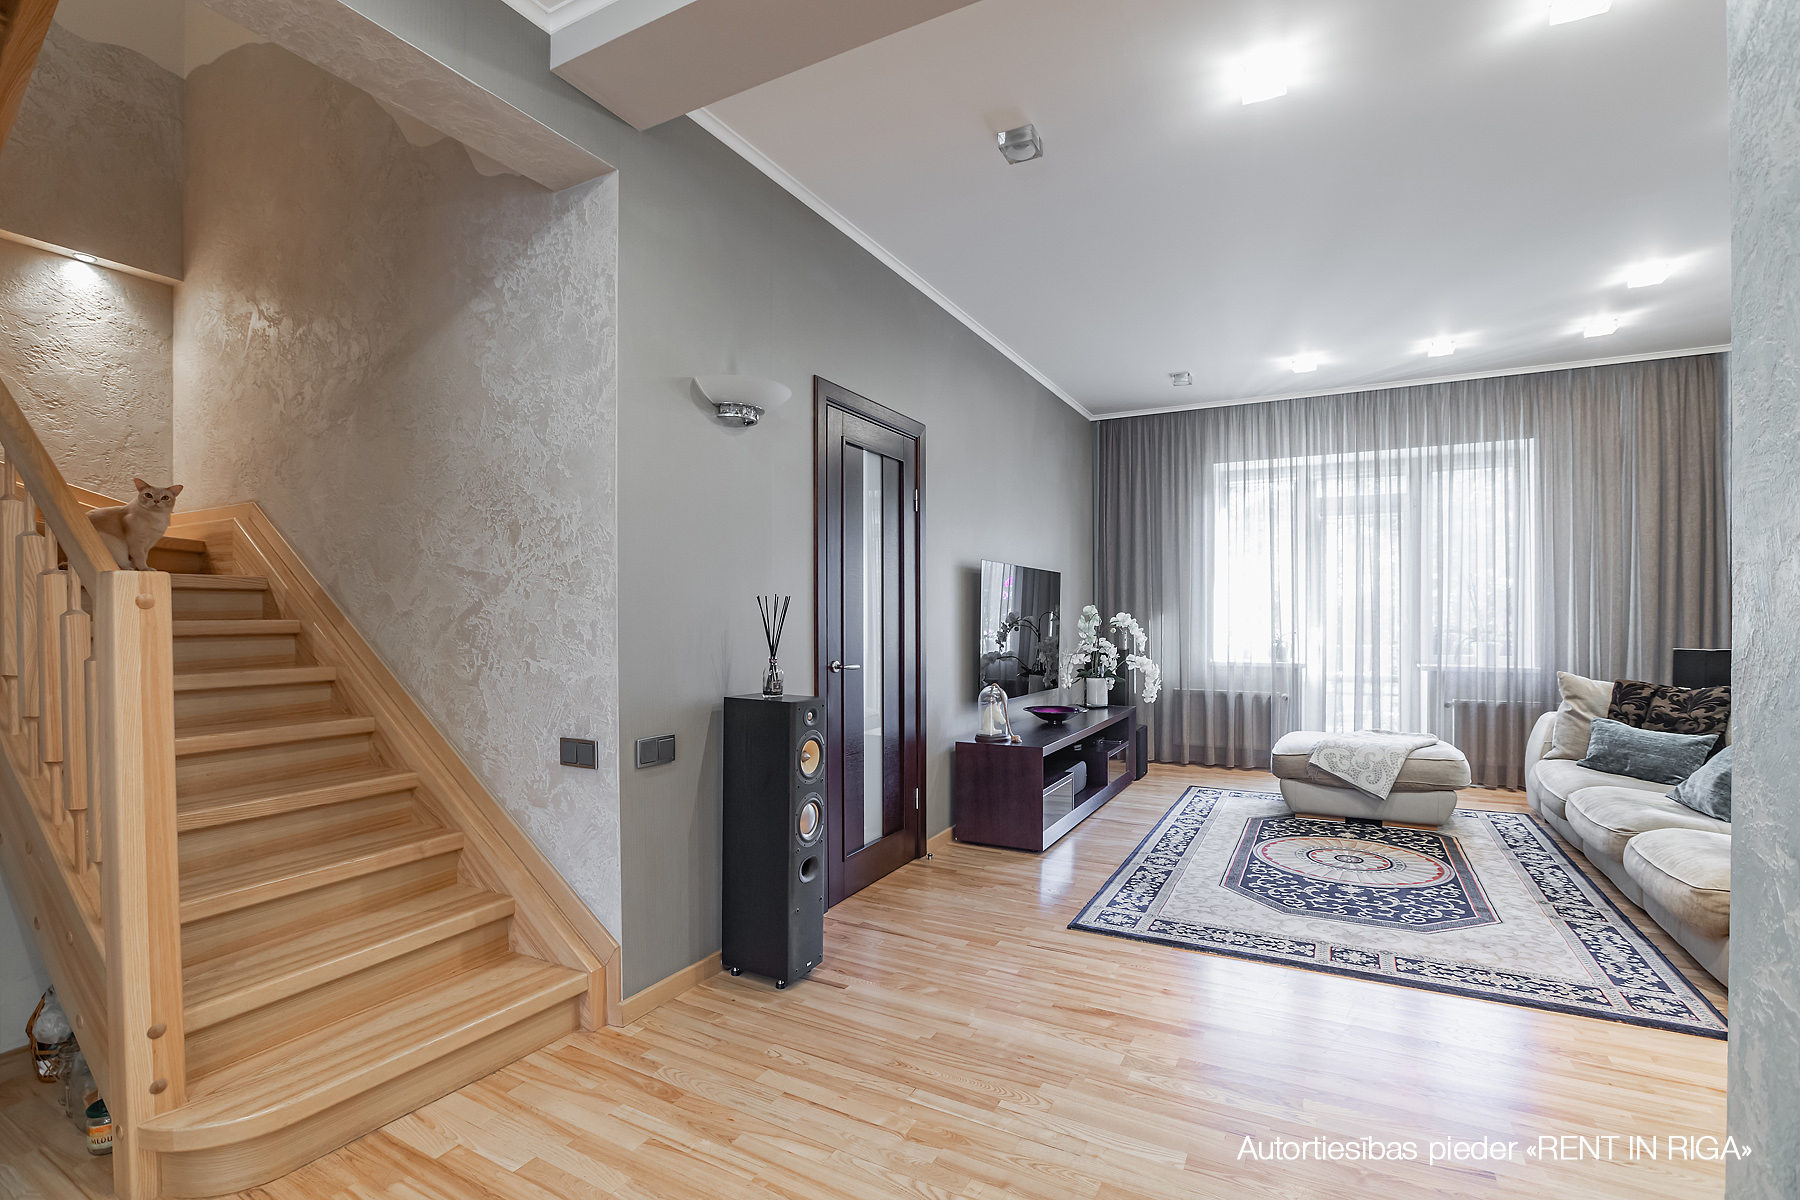 Apartment for sale, Viestura prospekts 89 - Image 1